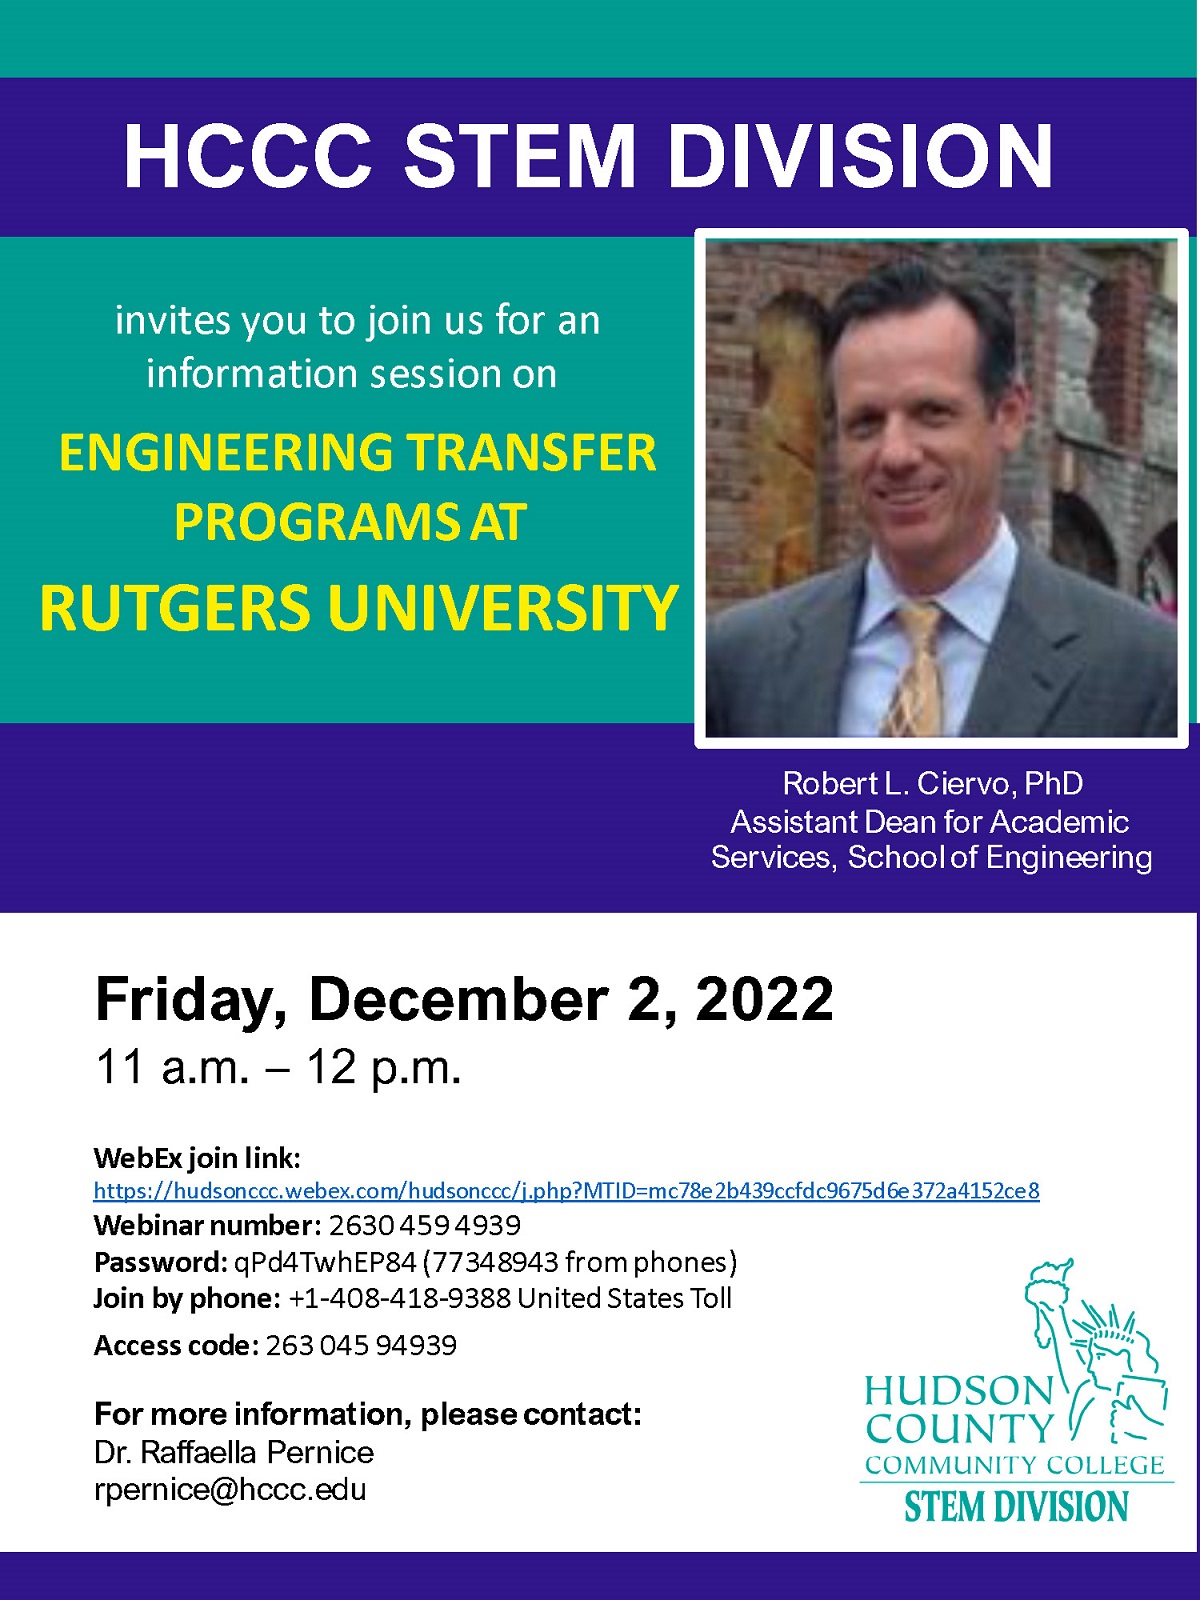 Engineering Transfer Programs at Rutgers University